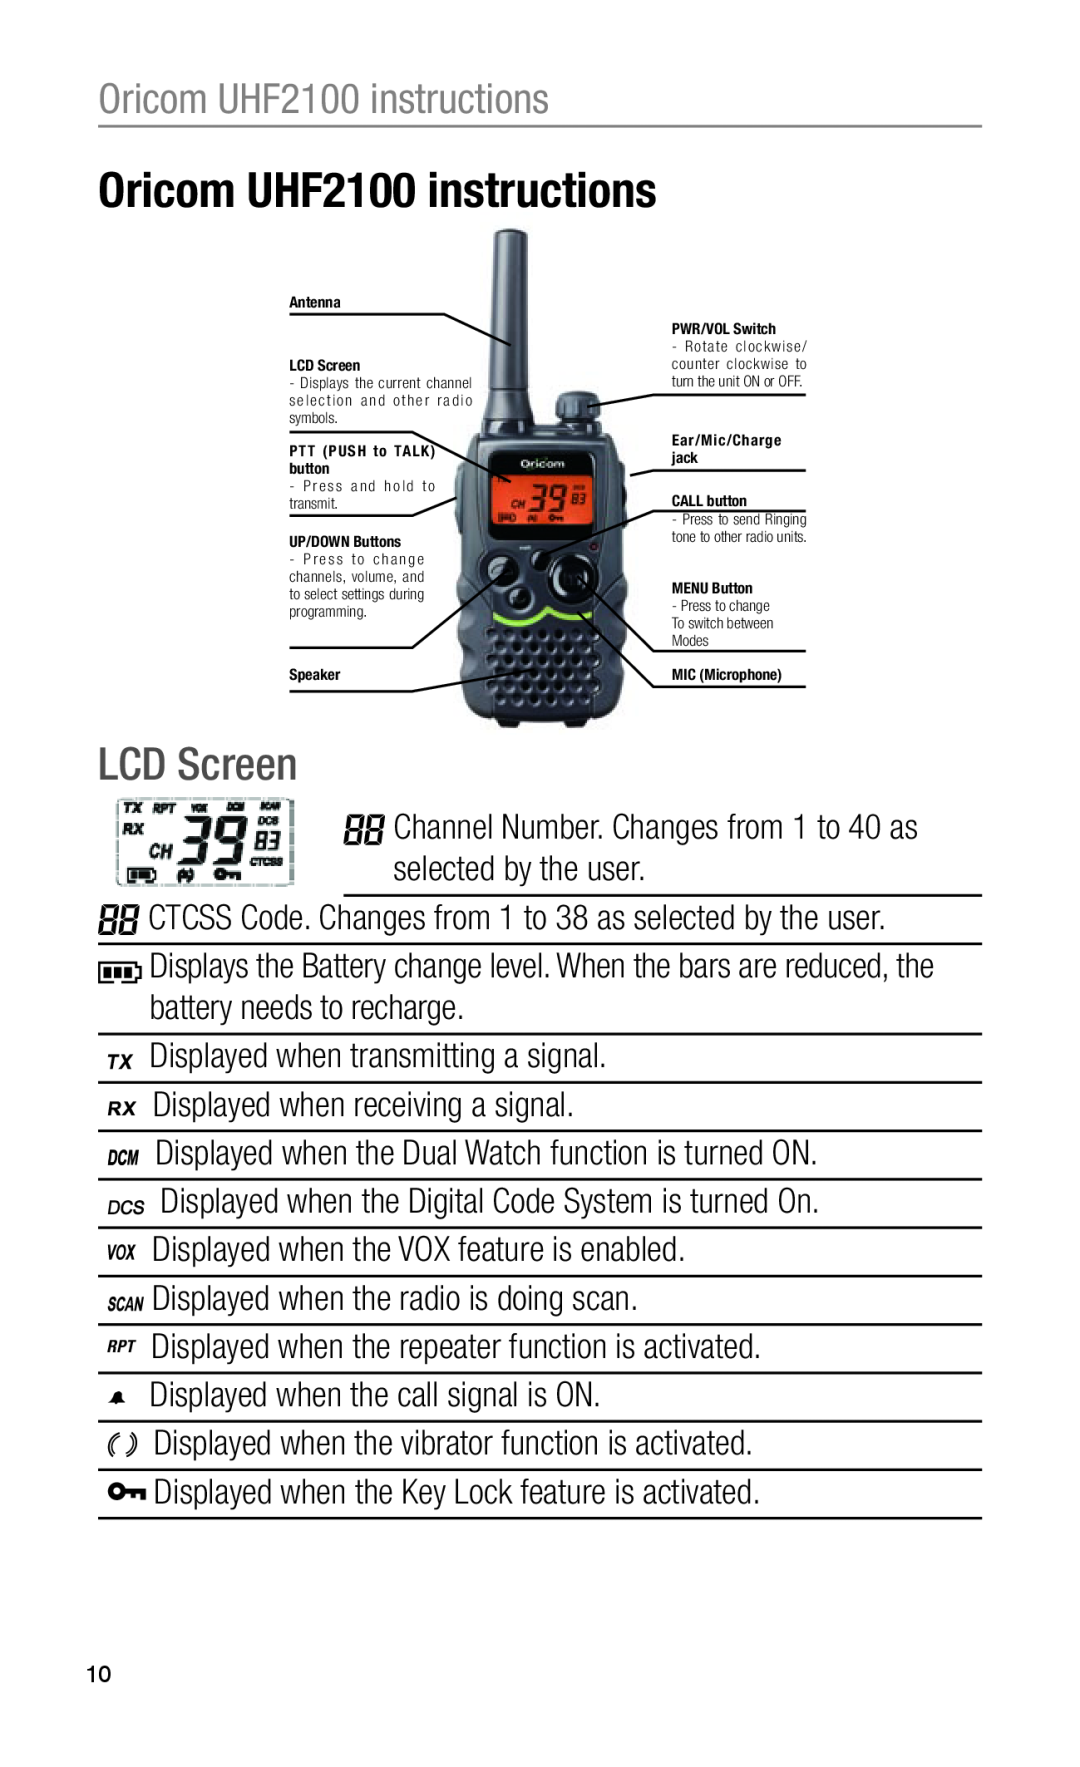 Oricom manual Oricom UHF2100 instructions, LCD Screen 